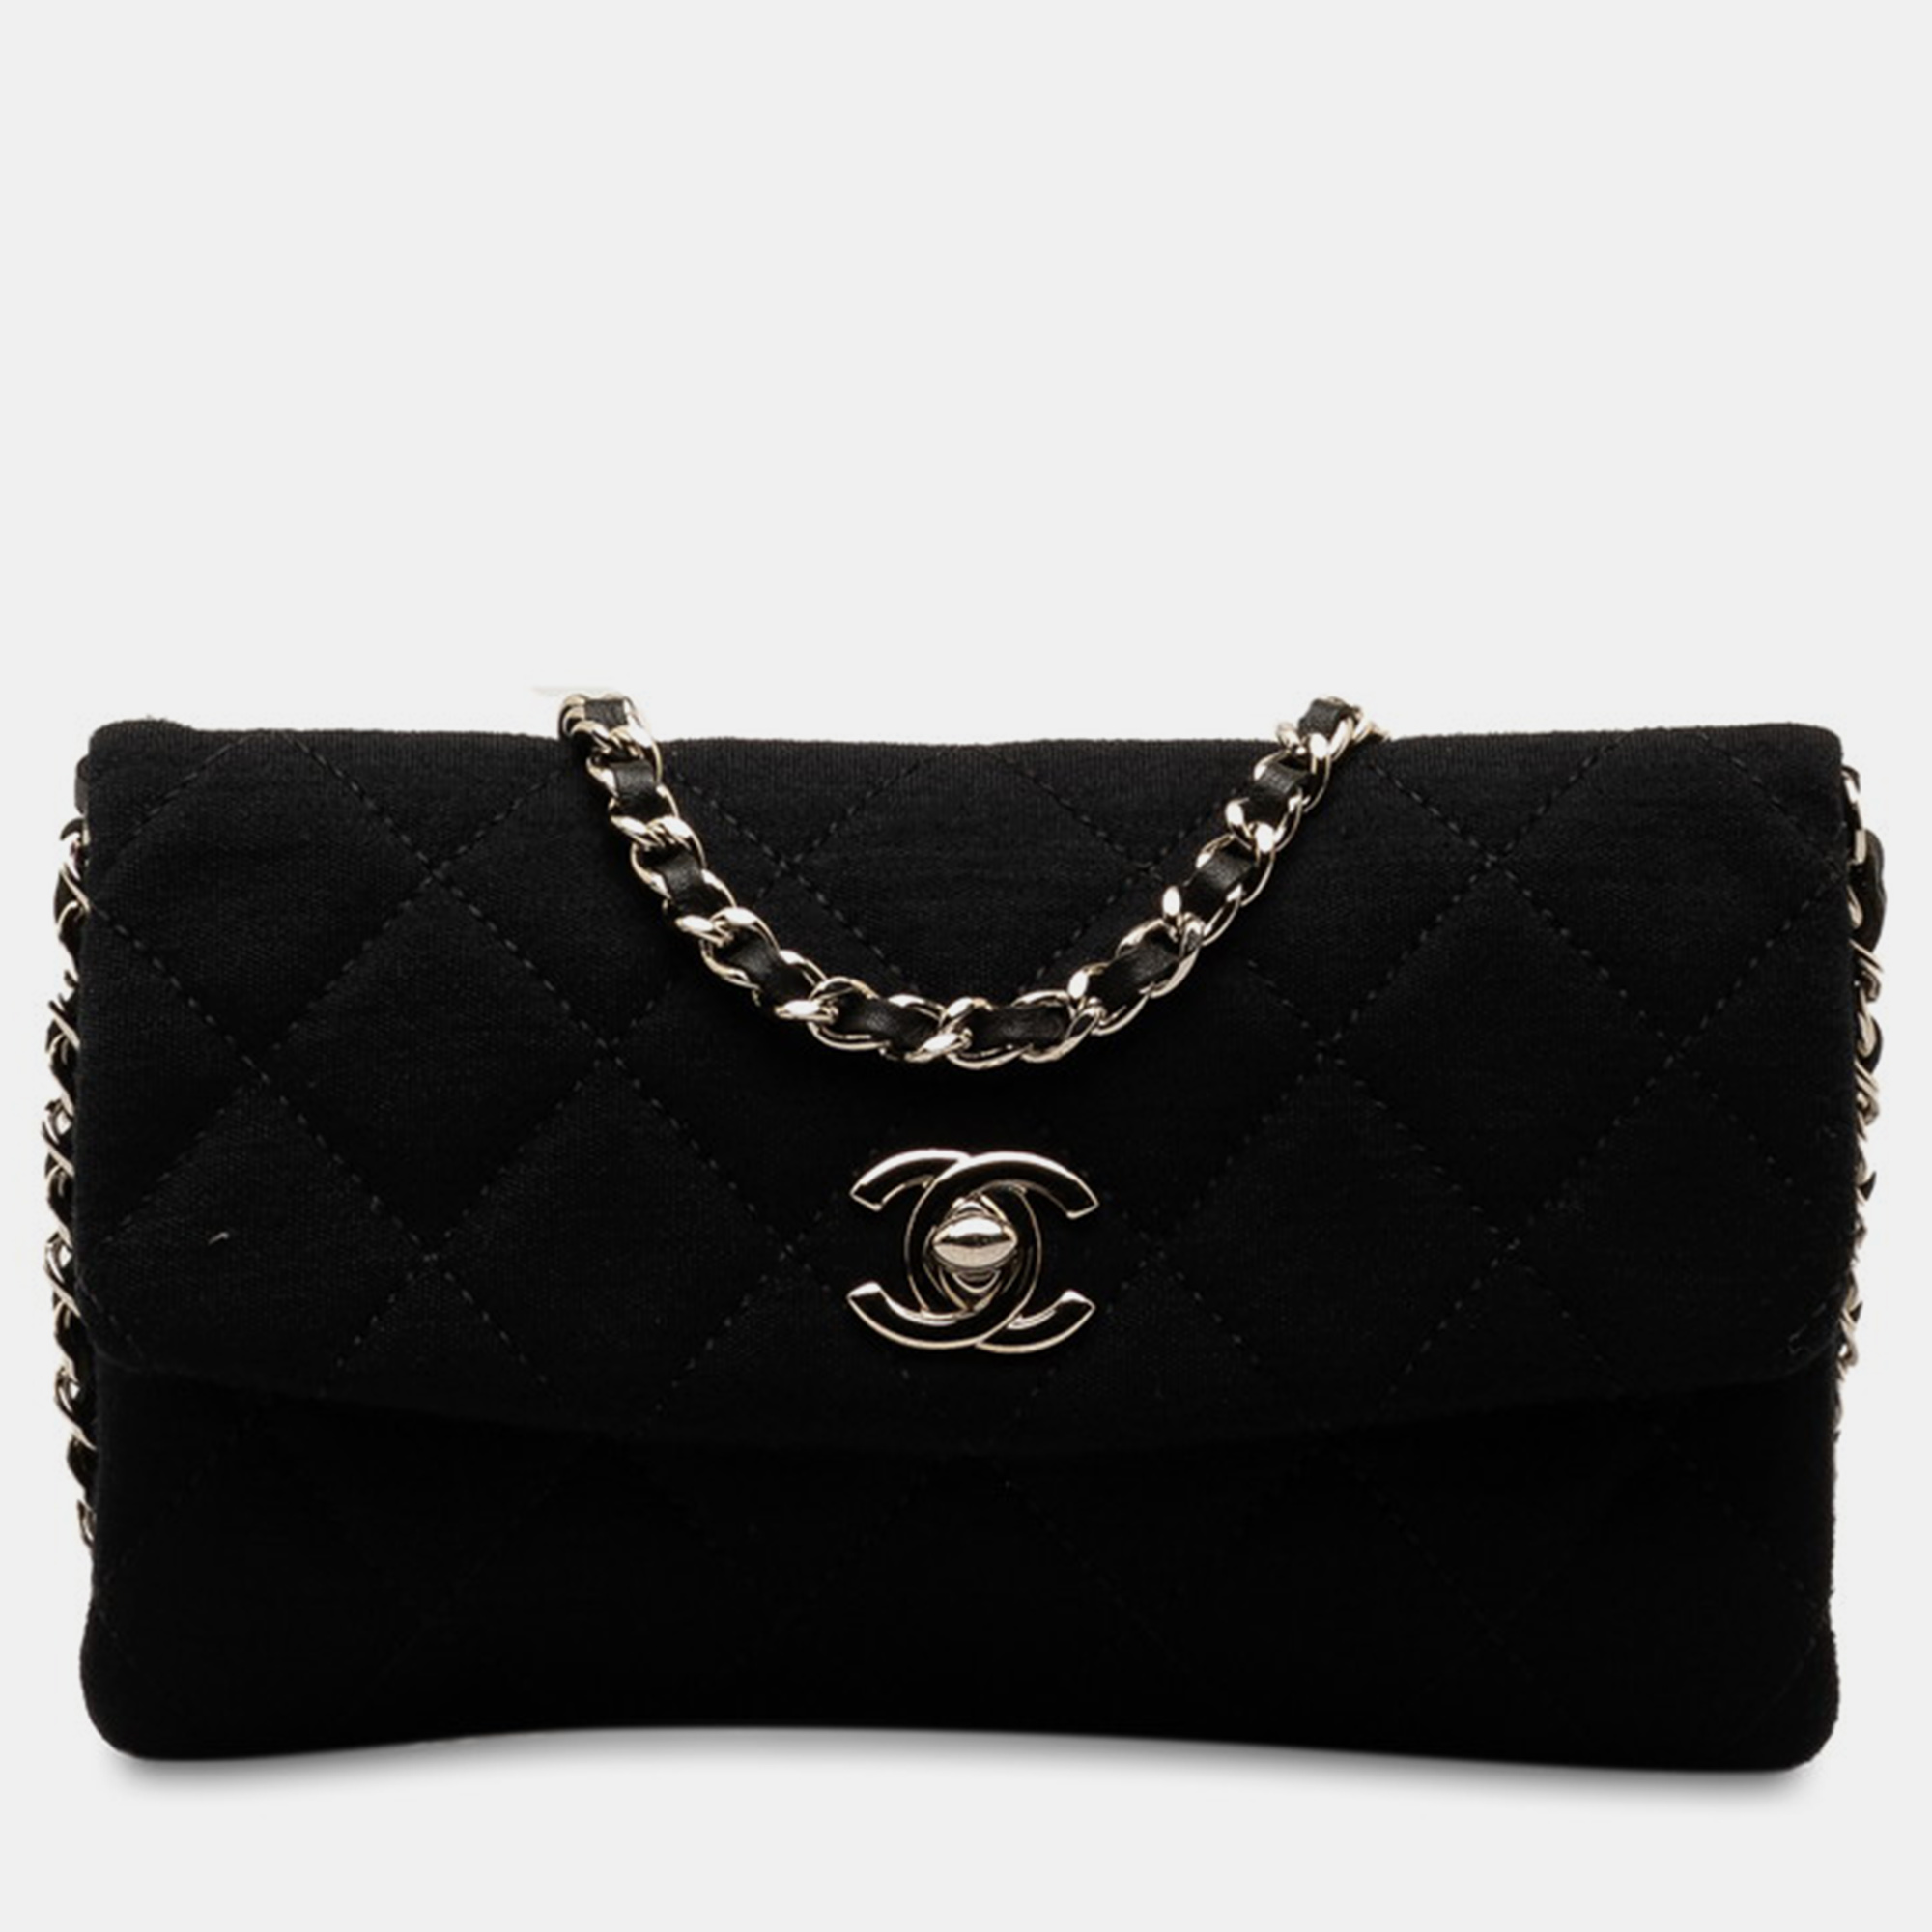 Chanel black fabric mini shoulder bags